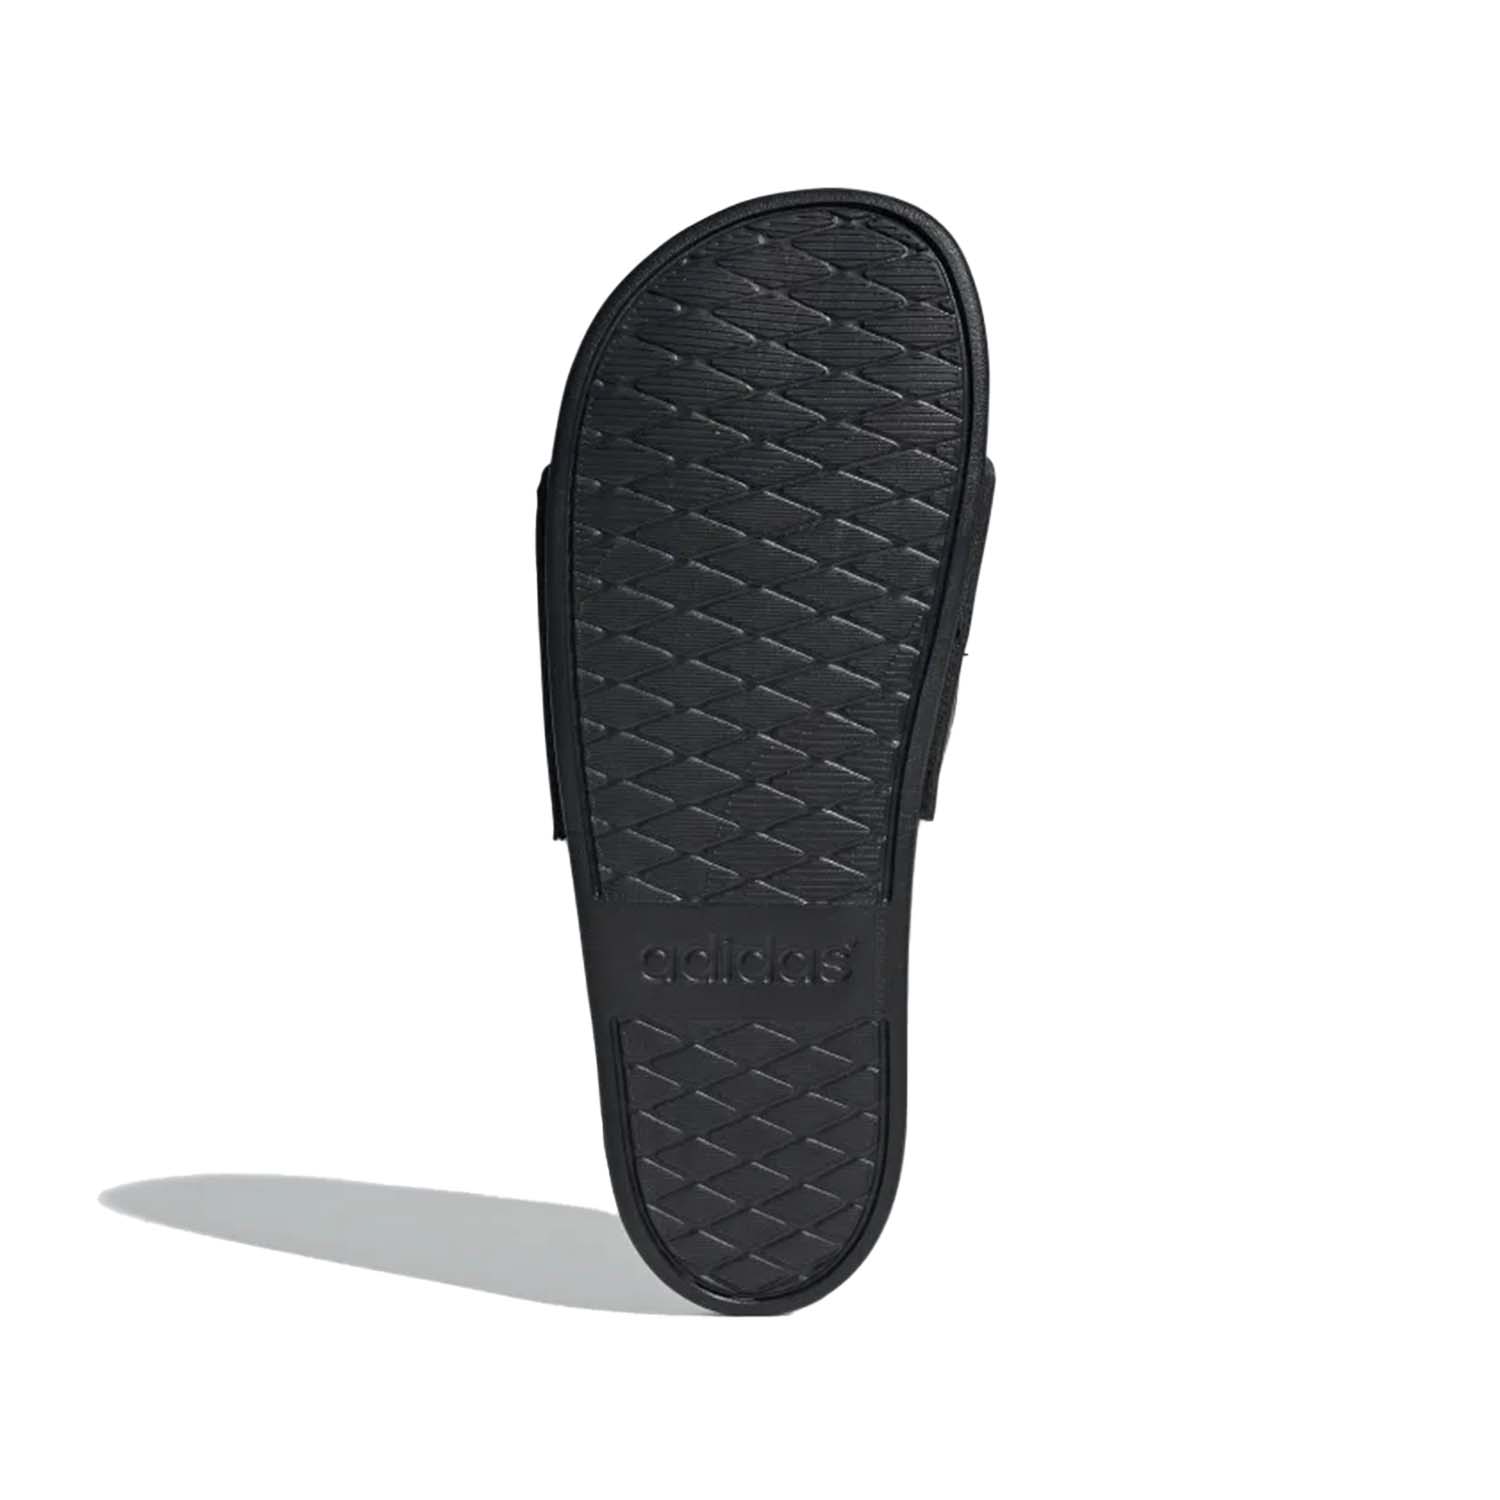 adidas Men Adilette Comfort Slides | GZ5896